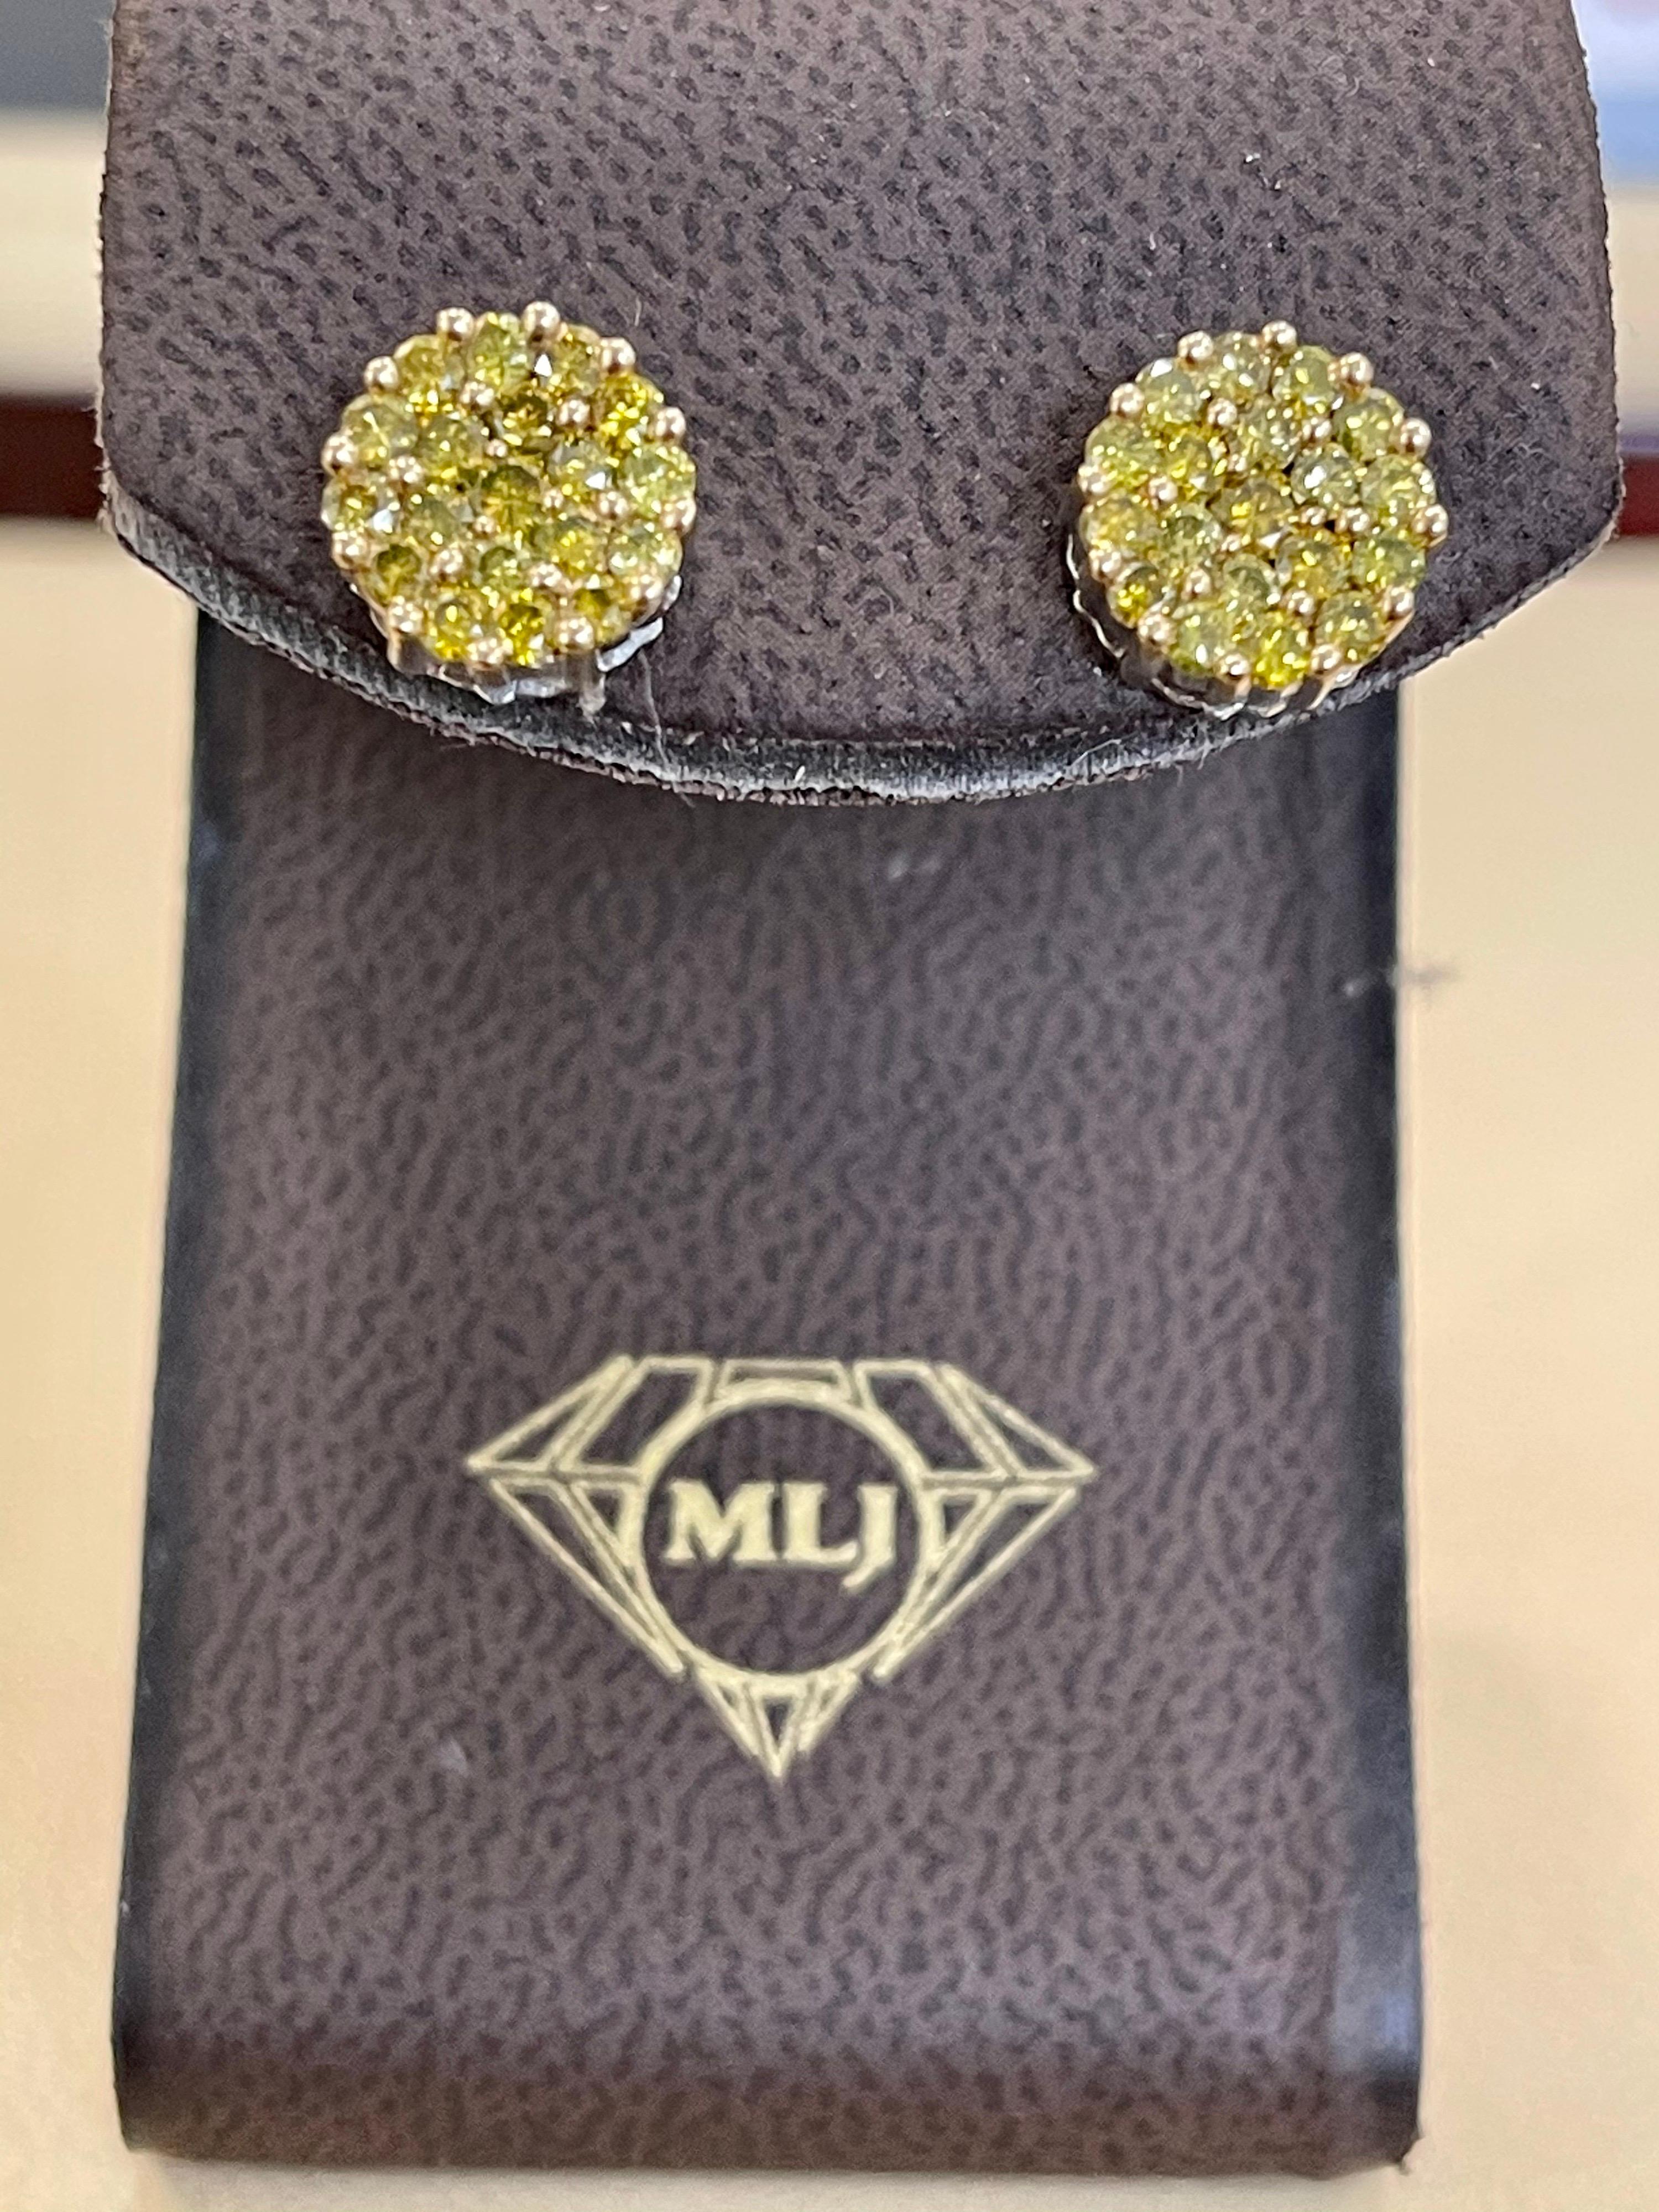 2 Carat Yellow Diamond Floral Cluster Flower Stud Earrings 14 Karat White Gold For Sale 6